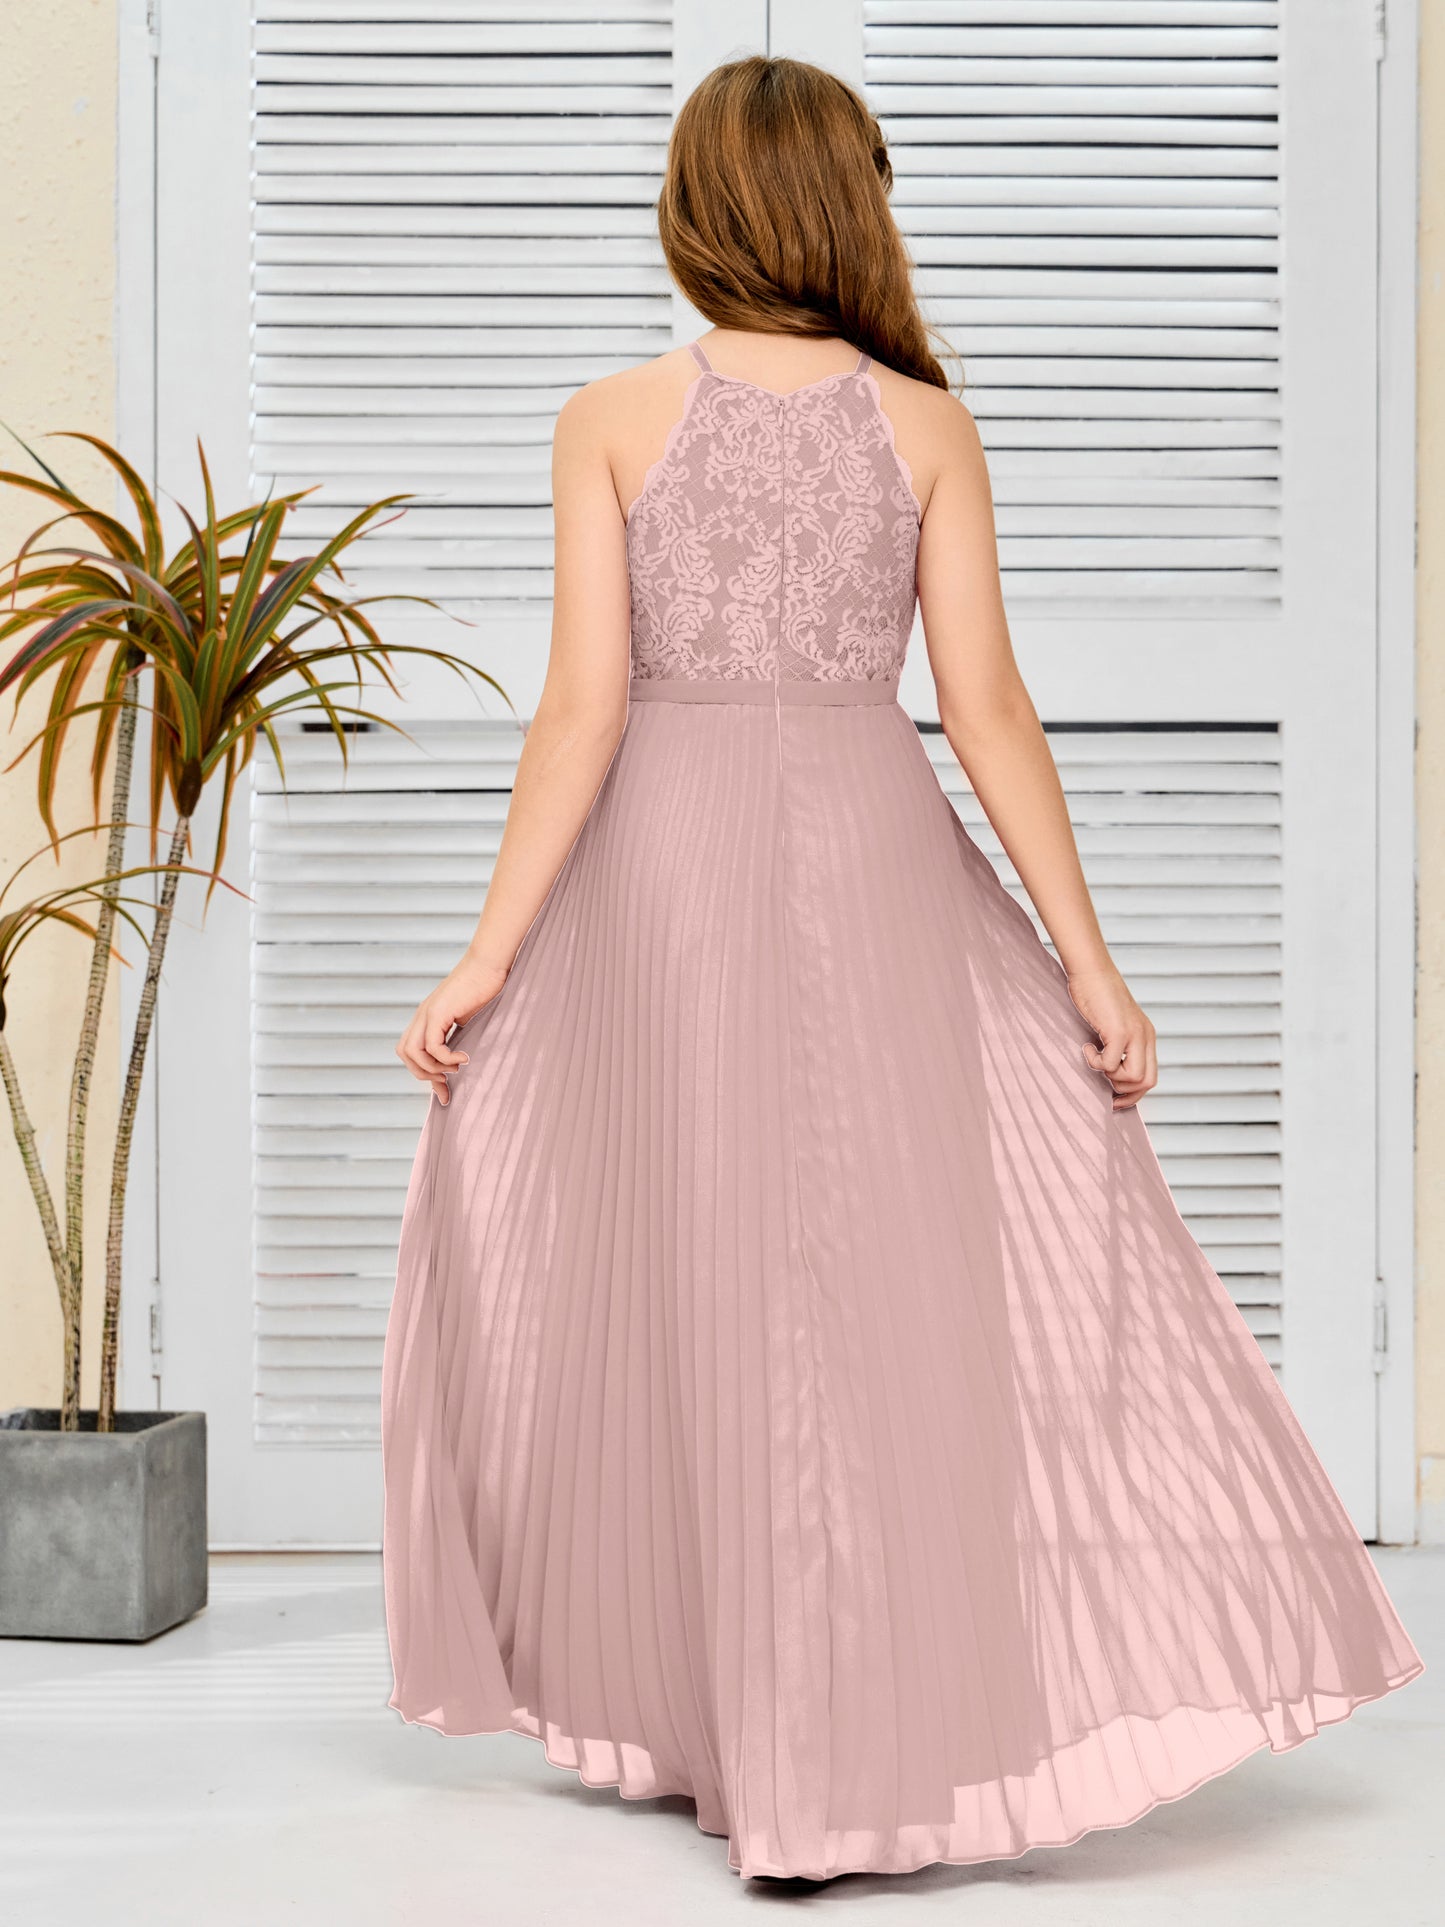 Halter Lace Sleeveless Junior Bridesmaid Dress